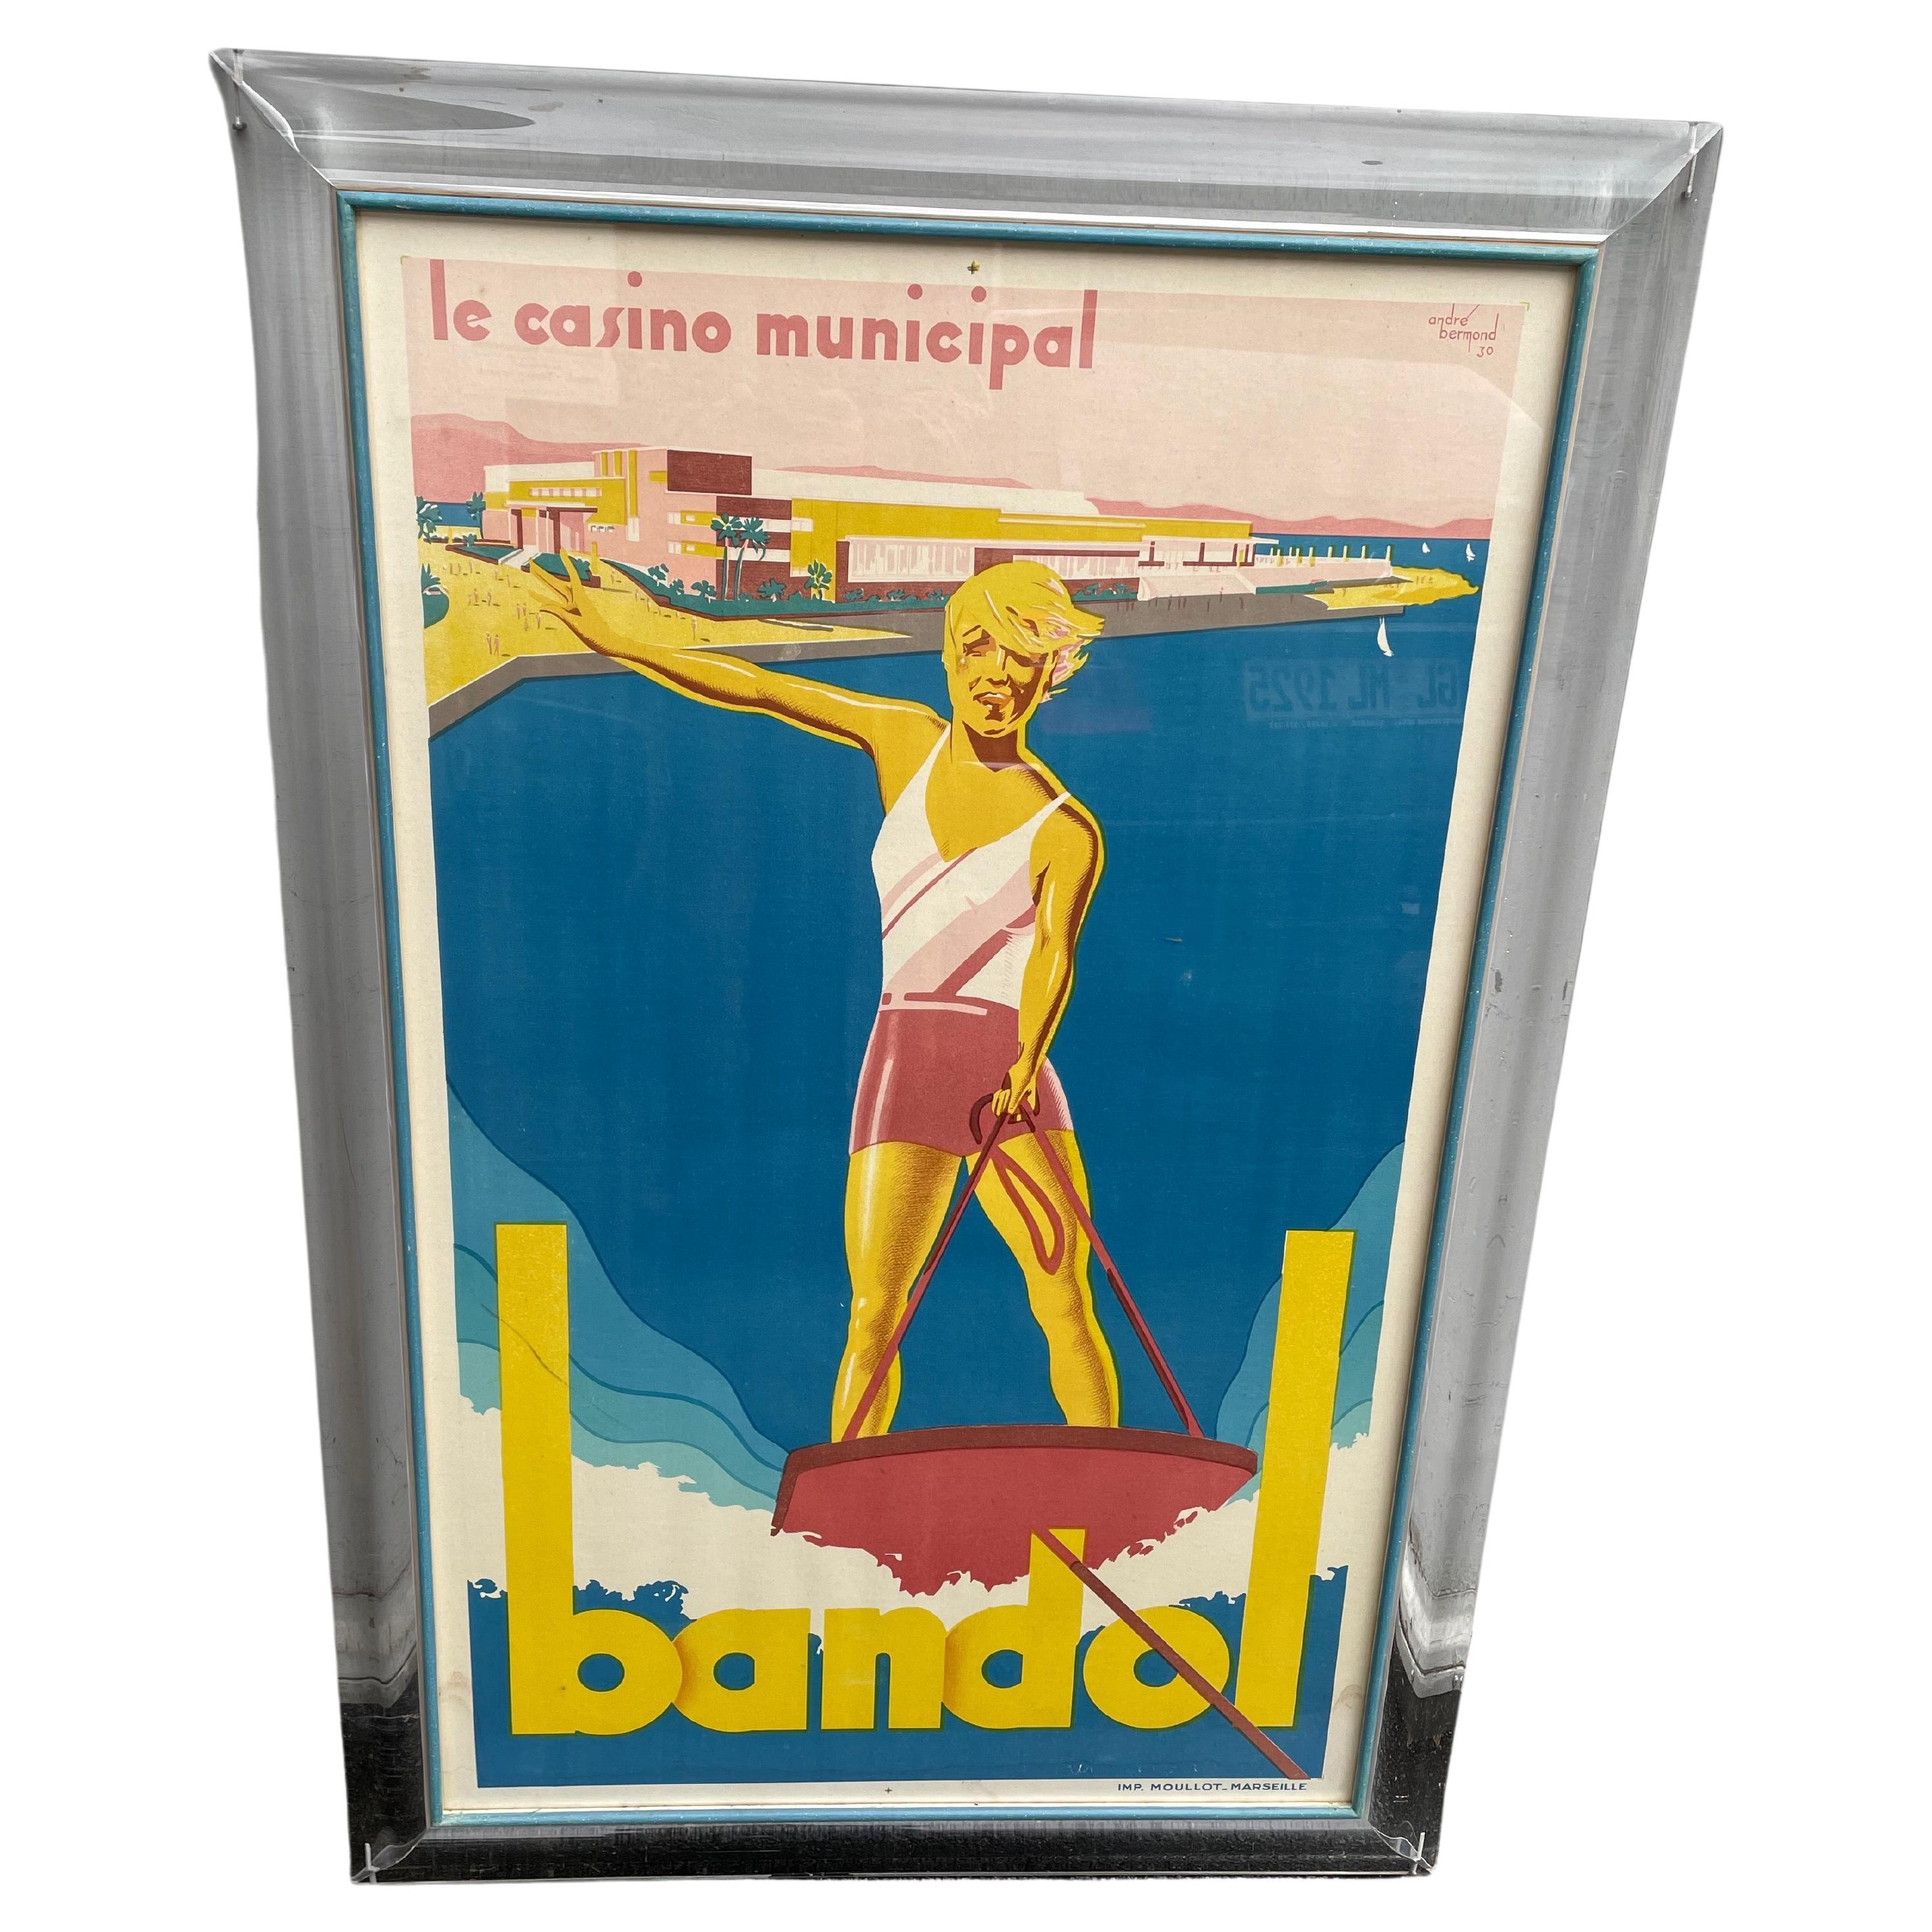 Travel Poster "Bandol Le Casino Municipal" A.Bermond. France 1930. Framed. For Sale